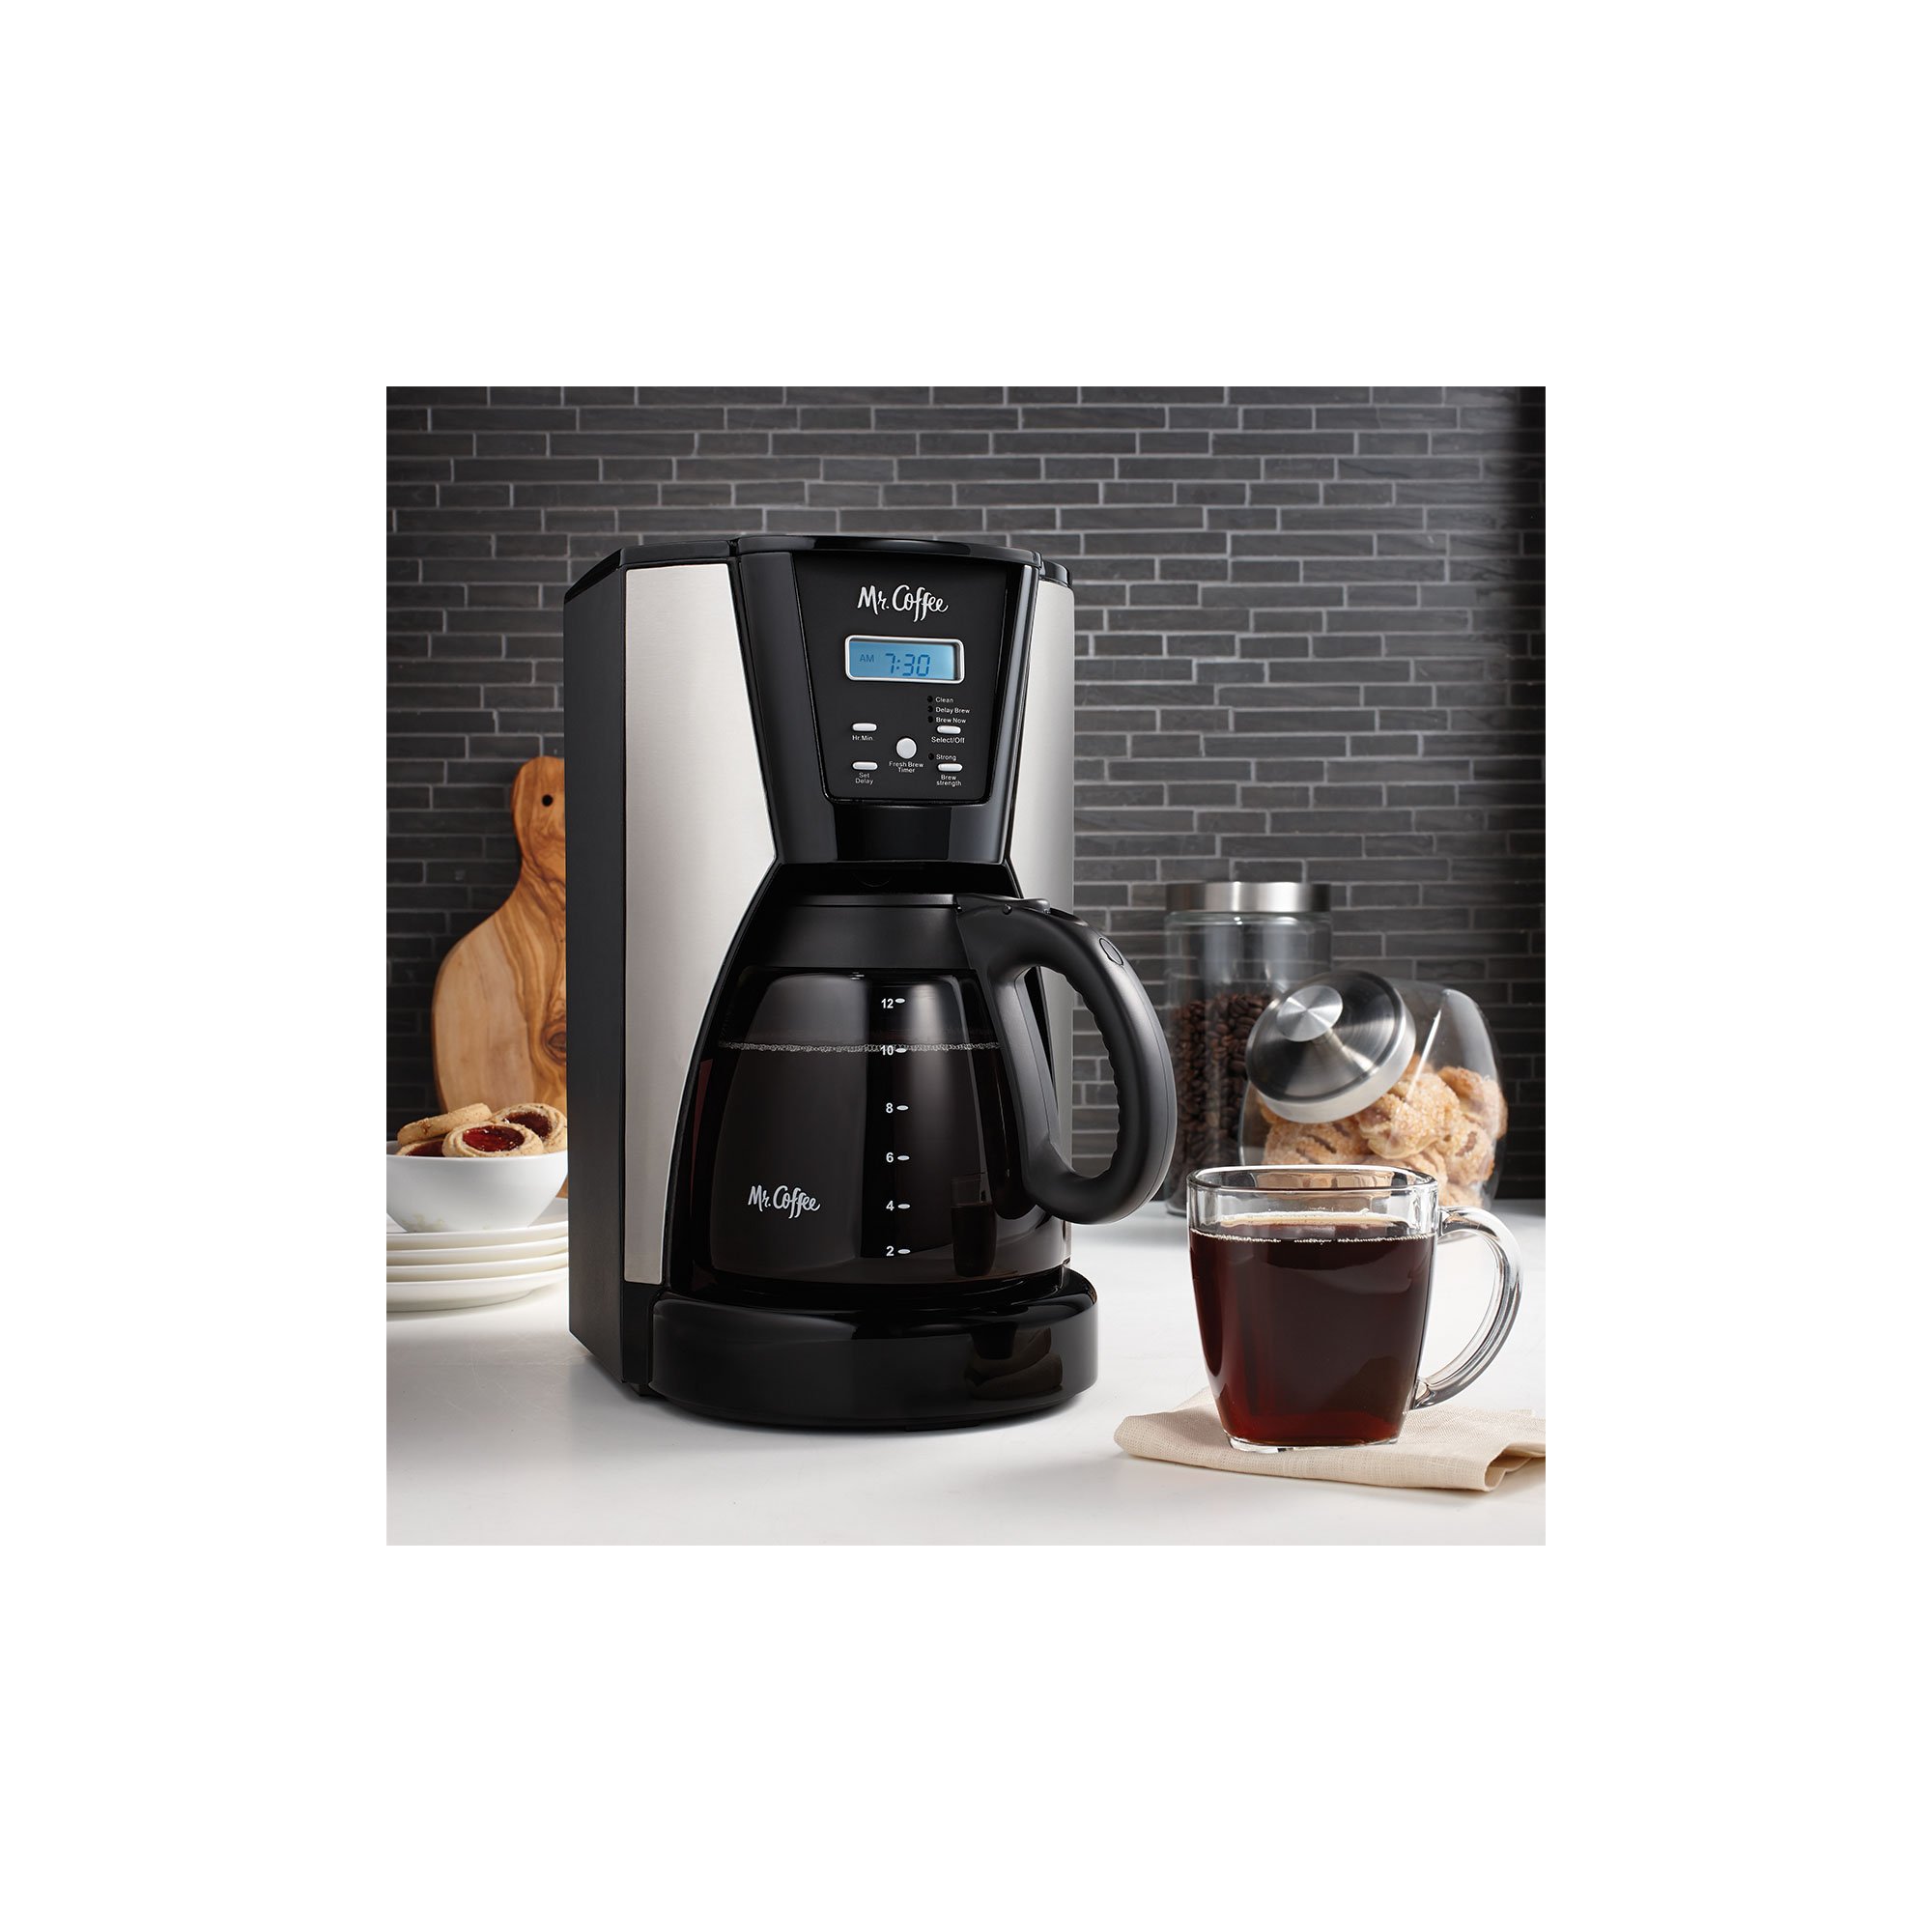 AVM Enterprises, Inc - Mr. Coffee 1 Cup Black/Silver Accent Coffee